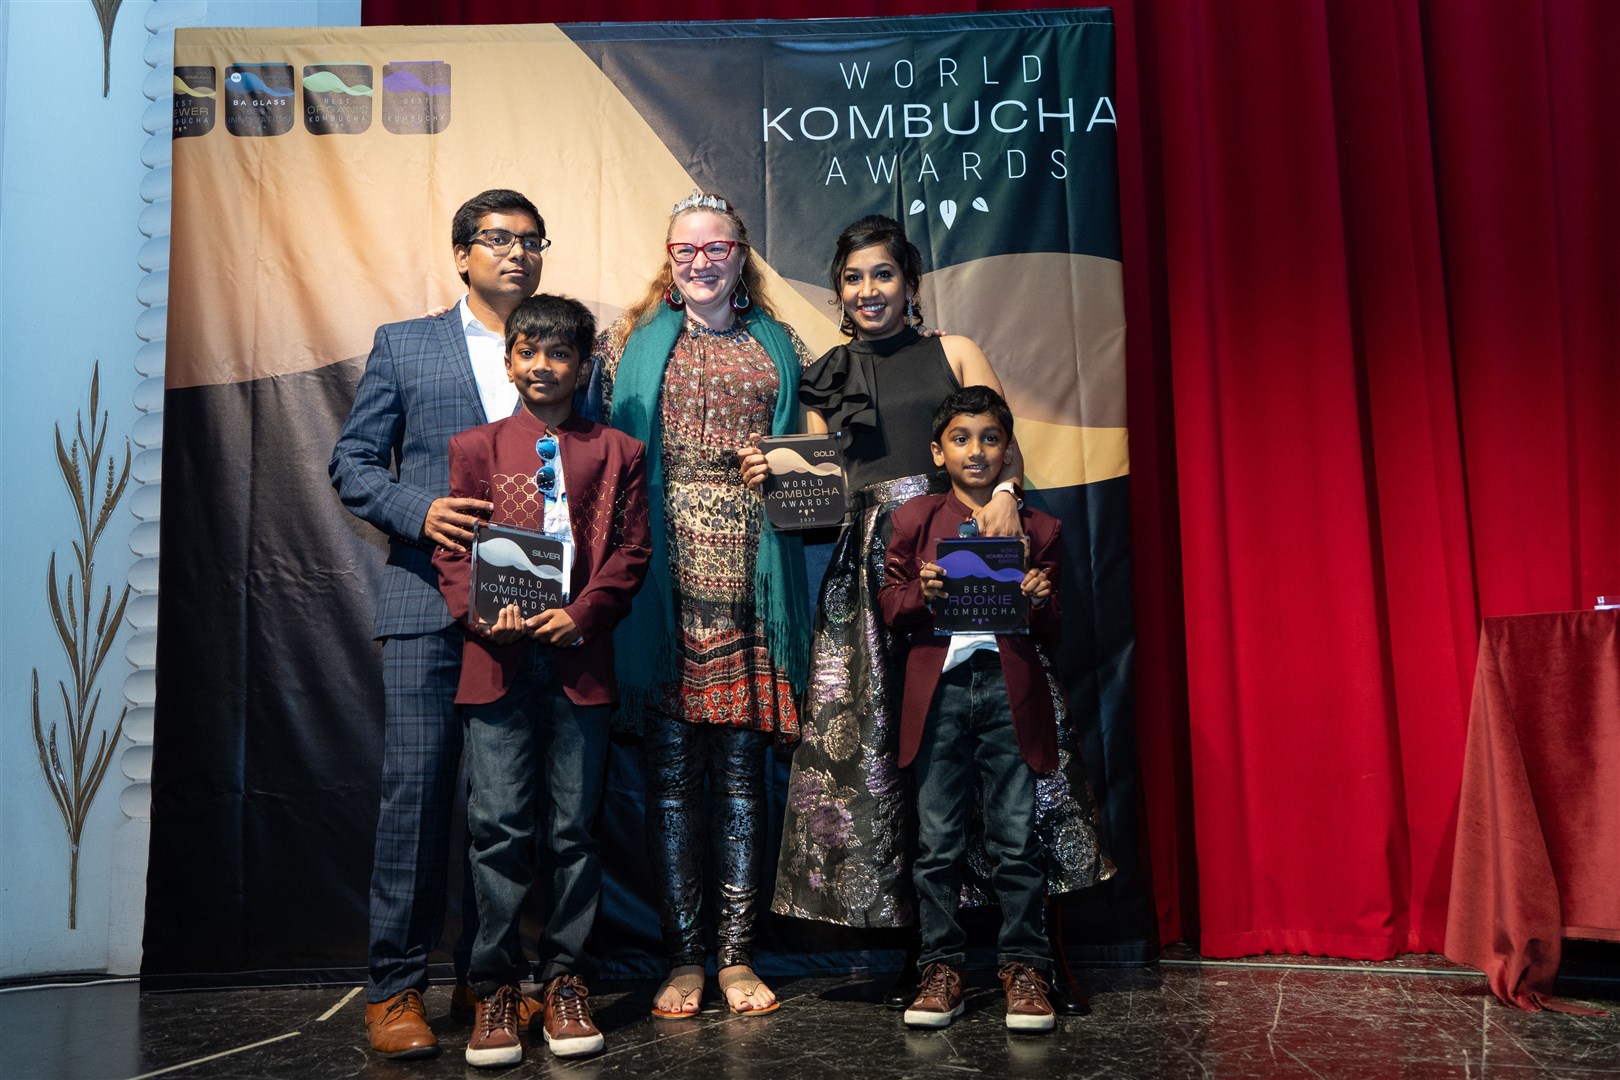 Kompassion Kombucha owner Rajkumar Dhanaraj and his family at the awards ceremony in Spain.